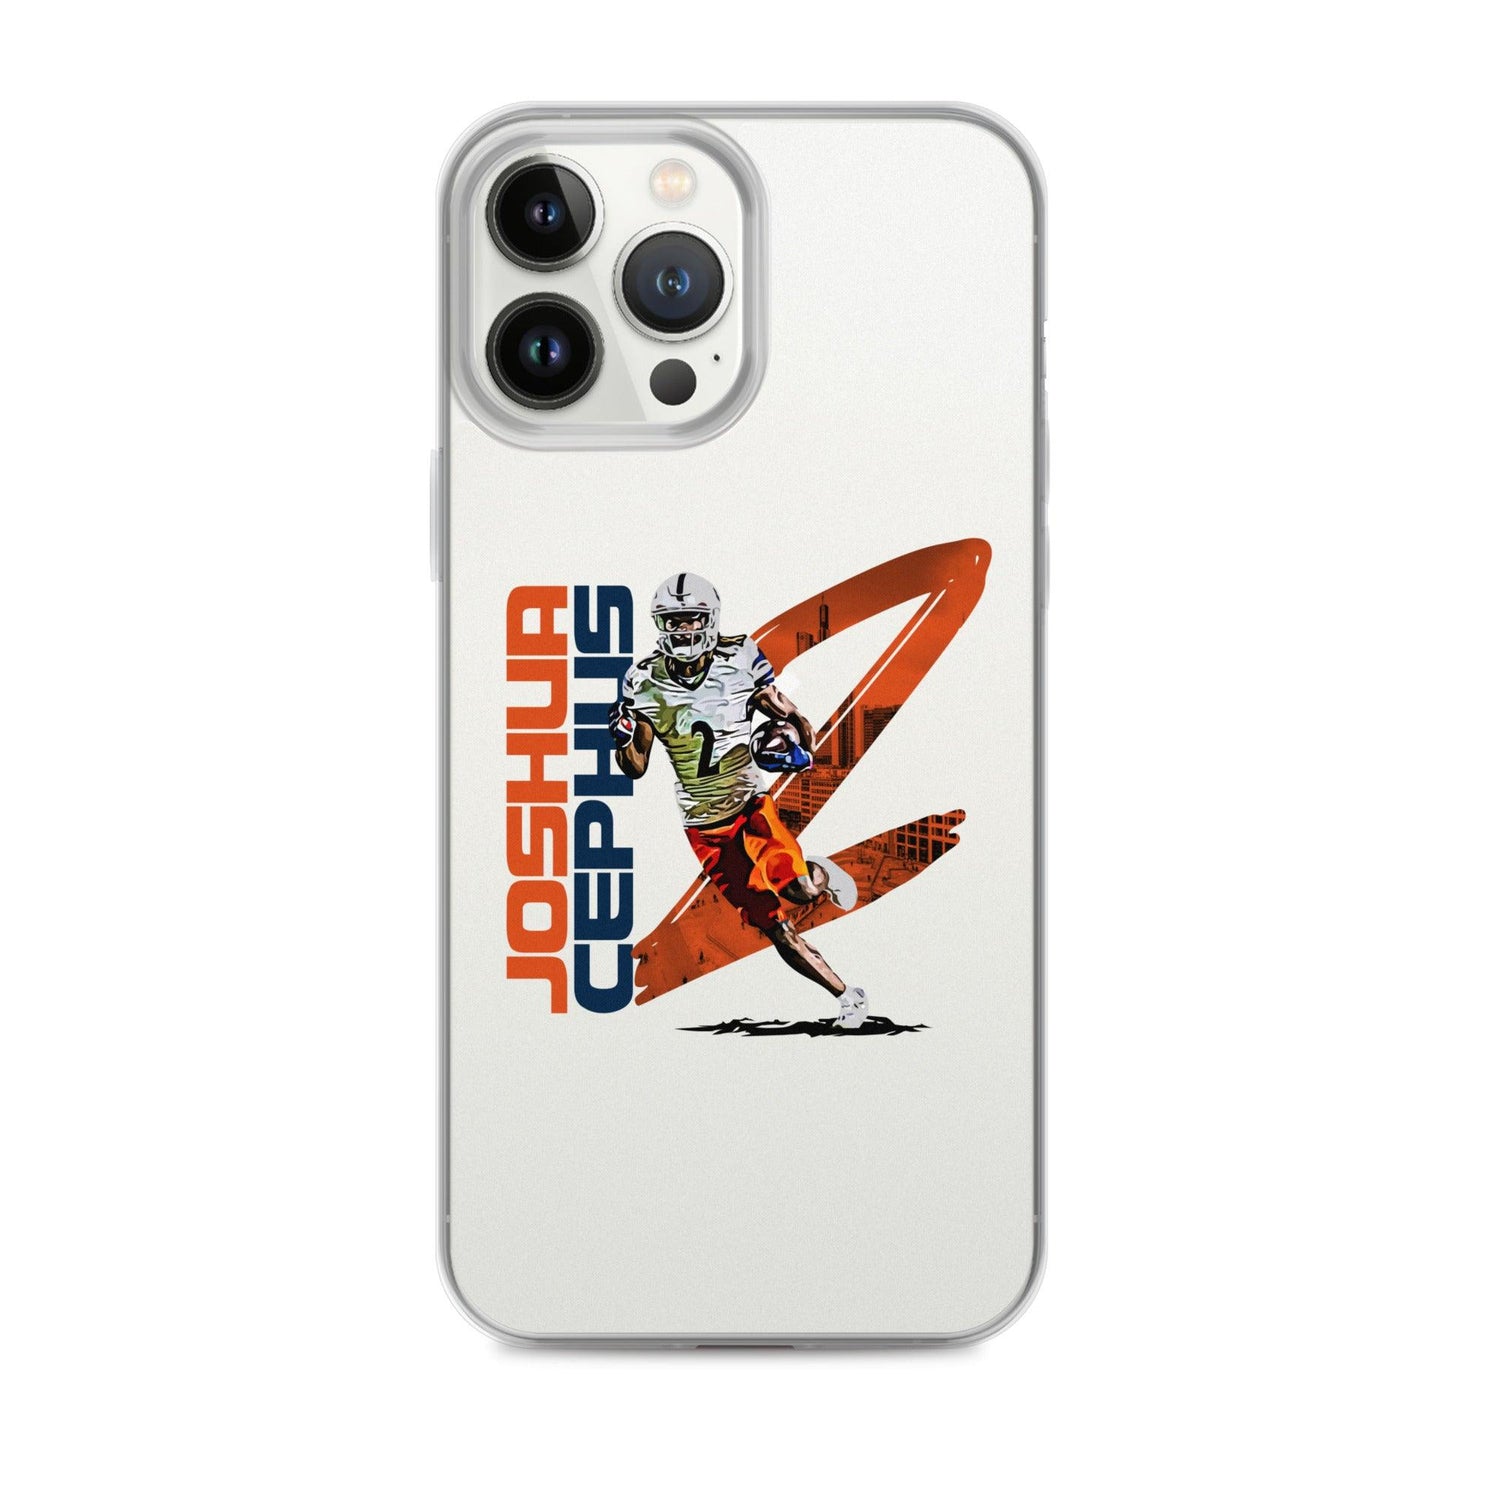 Joshua Cephus "Gameday" iPhone Case - Fan Arch